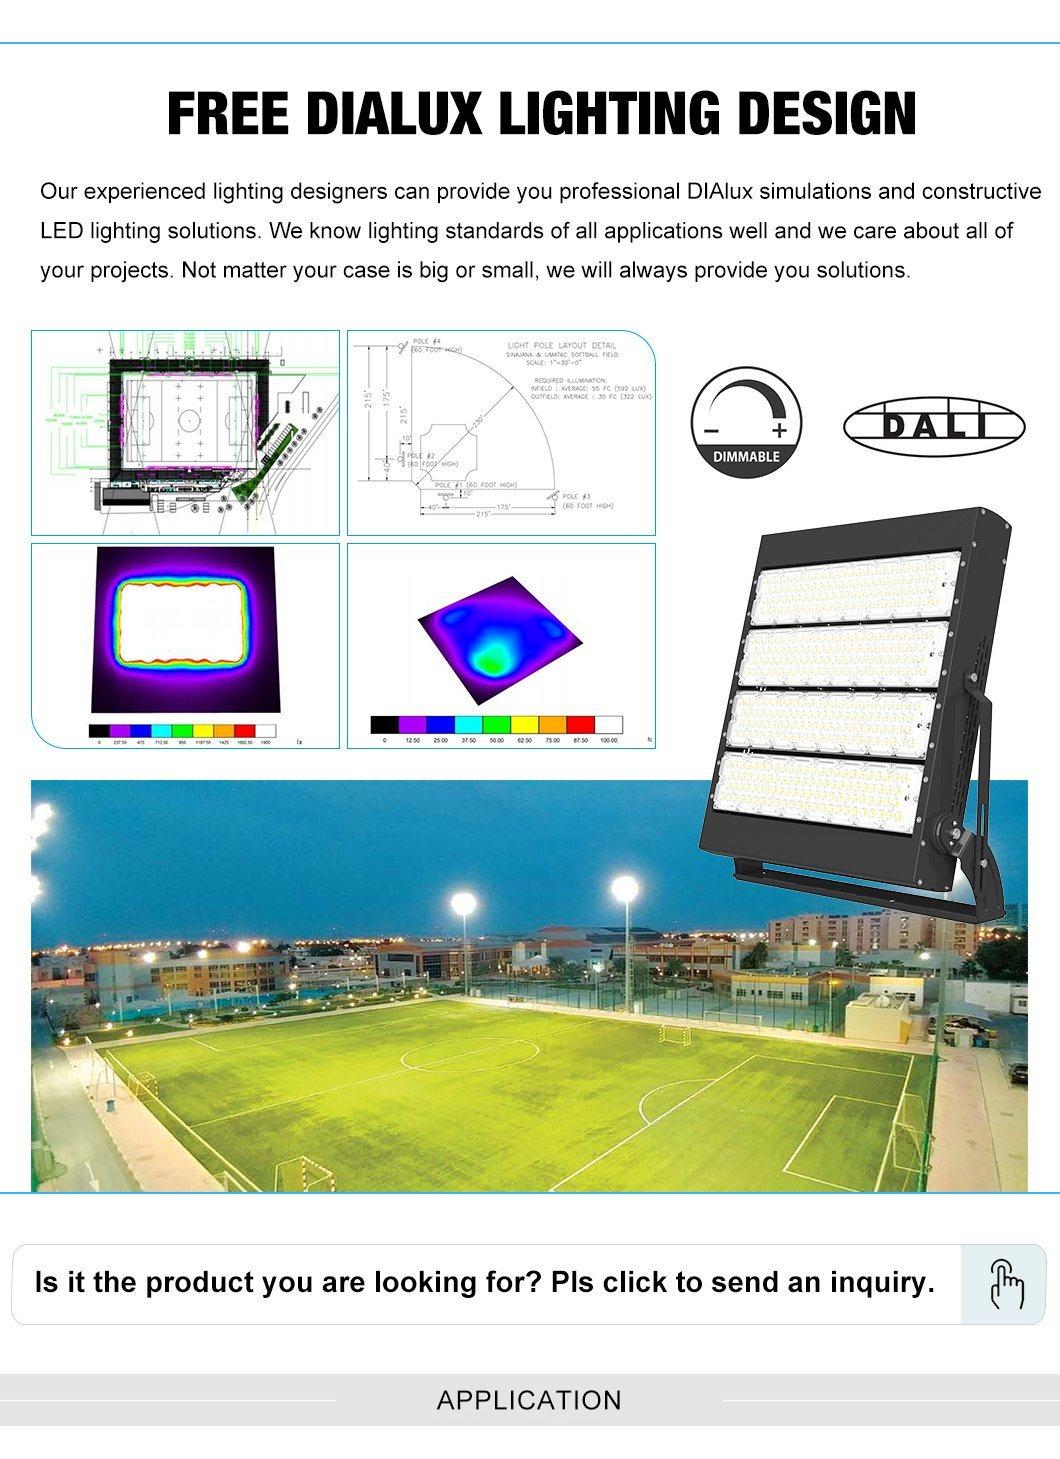 Romanso Professional Stadium Lighting 400W High Power Flood Stadium Light LED for 5 Year Warranty